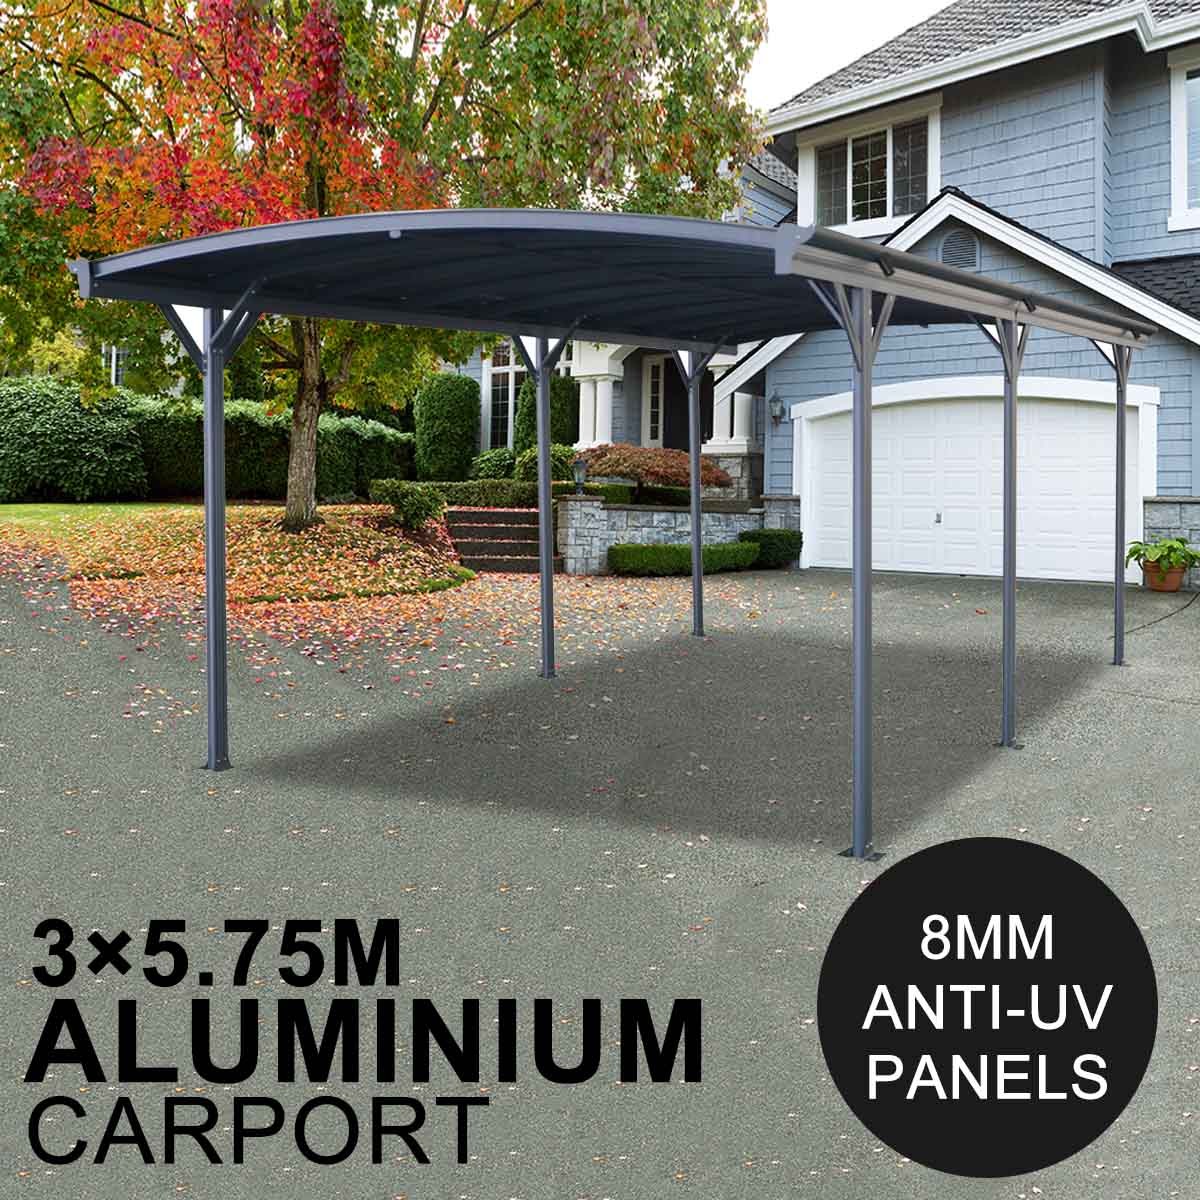 Aluminium Carport  3 x 5 7M Outdoor  Canopy  Car Port  